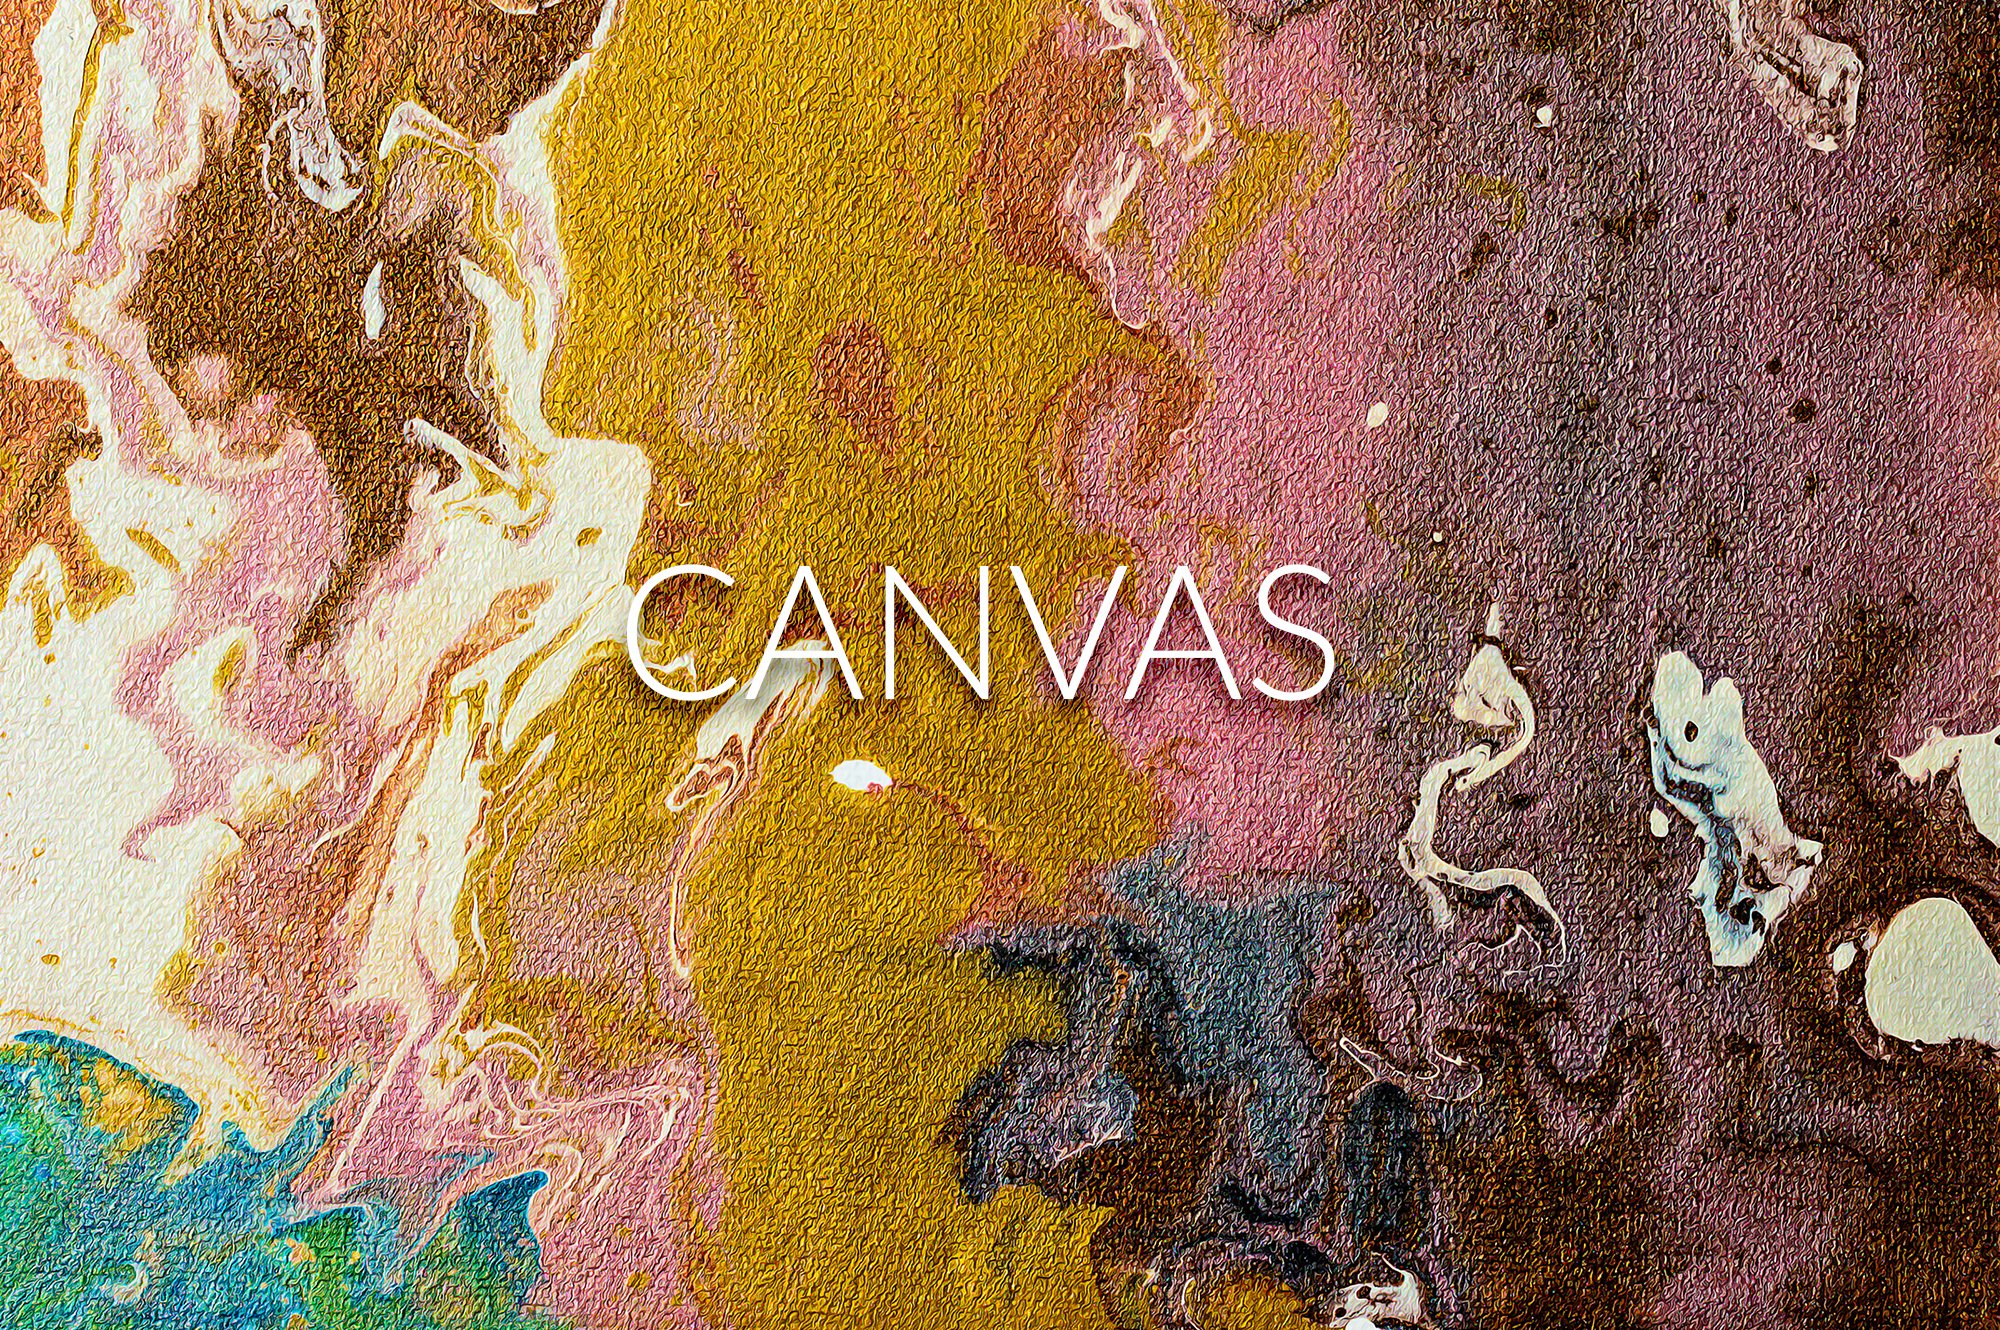 Liquid Paint - Canvas Vol. 1 cover image.